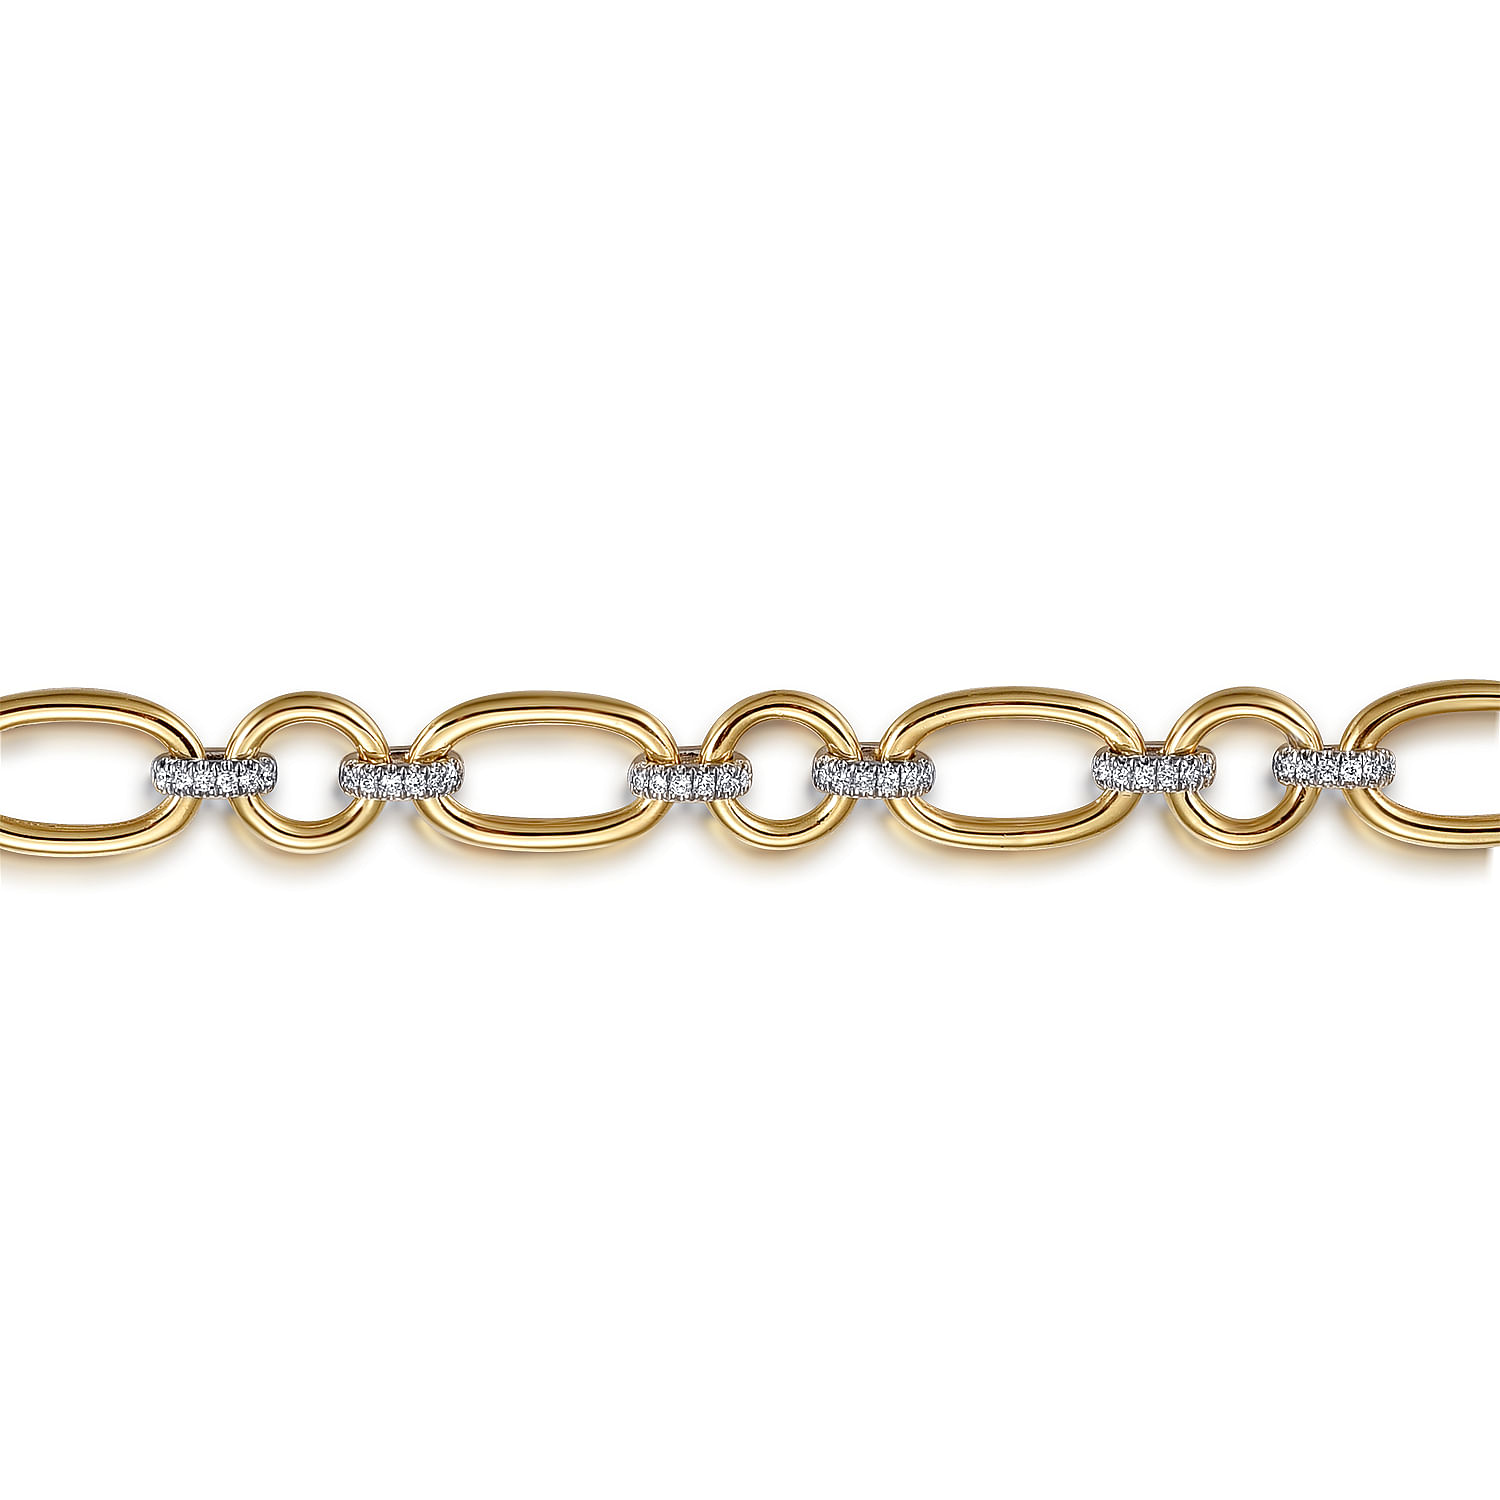 14K White and Yellow Gold Diamond Hollow Tube Link Chain Bracelet